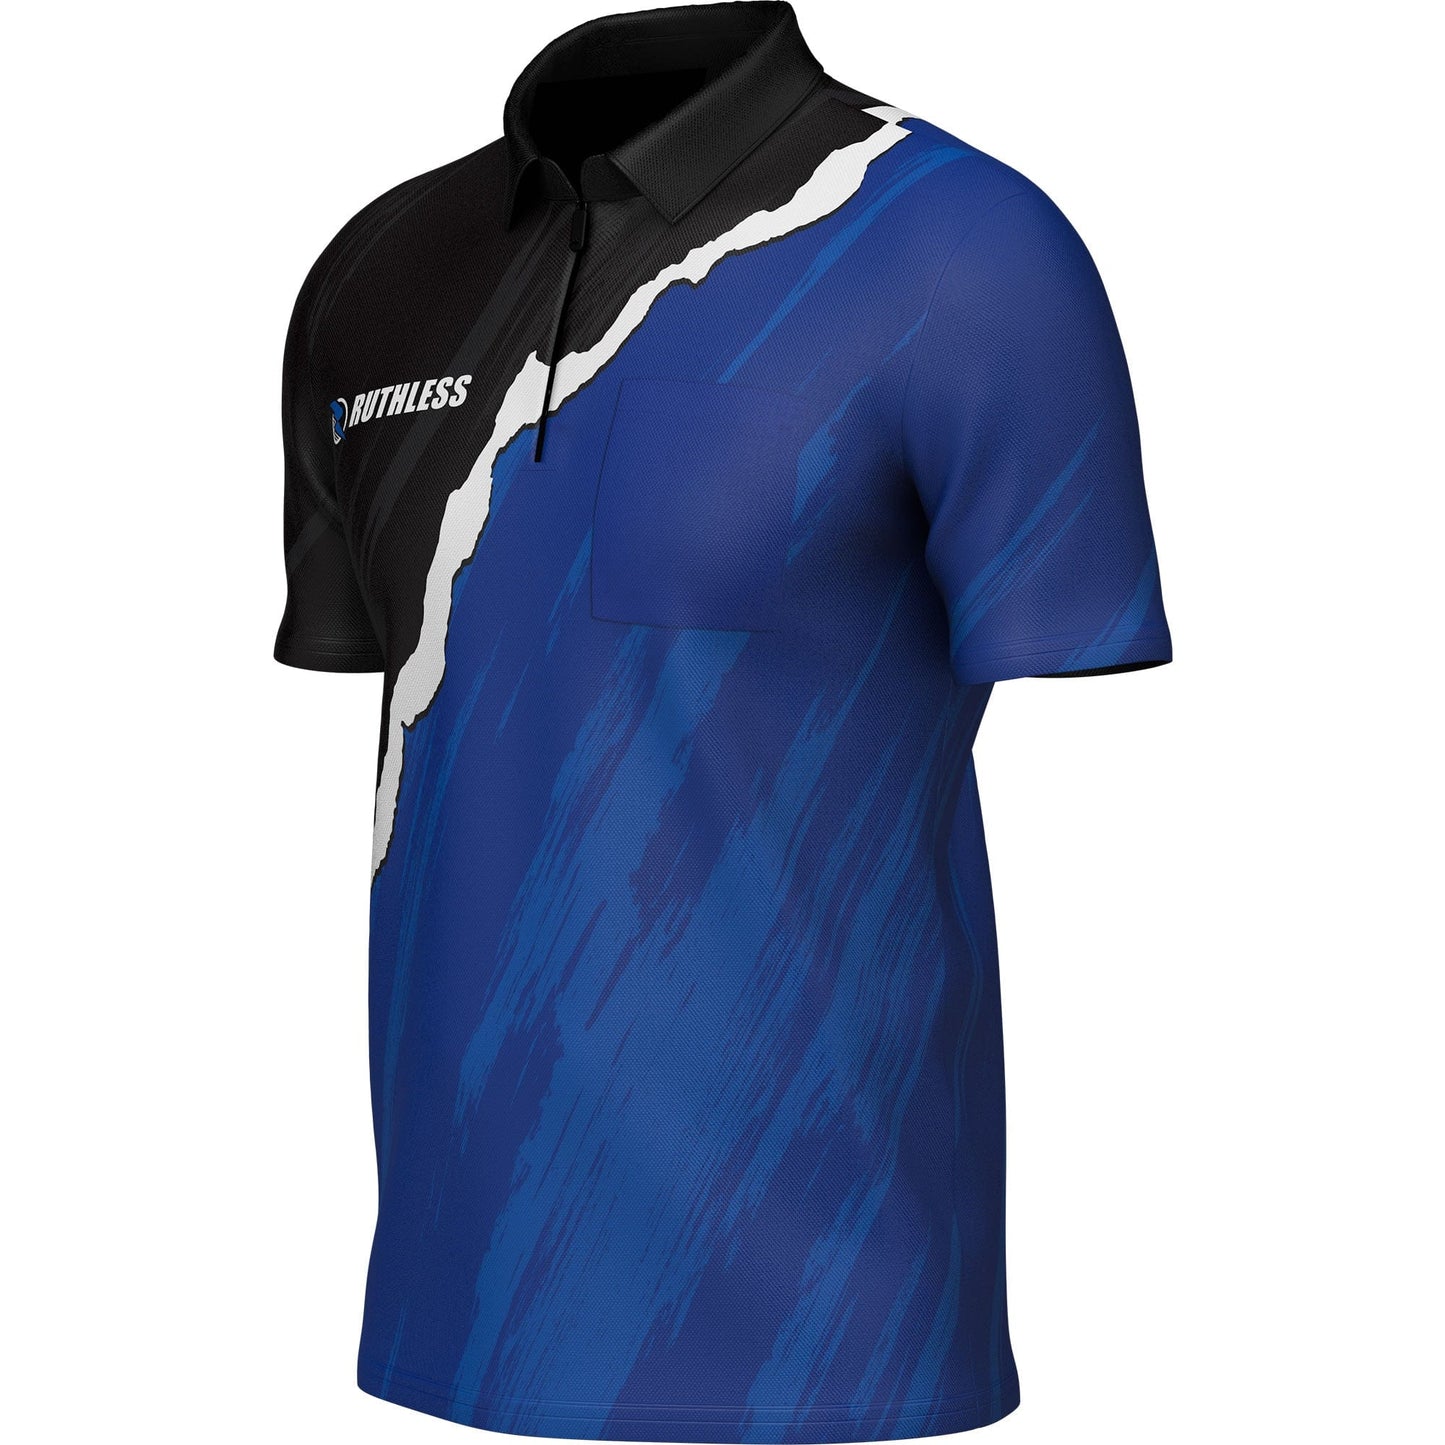 Ruthless RipTorn ECO Dart Shirt - with Pocket - Black & Blue